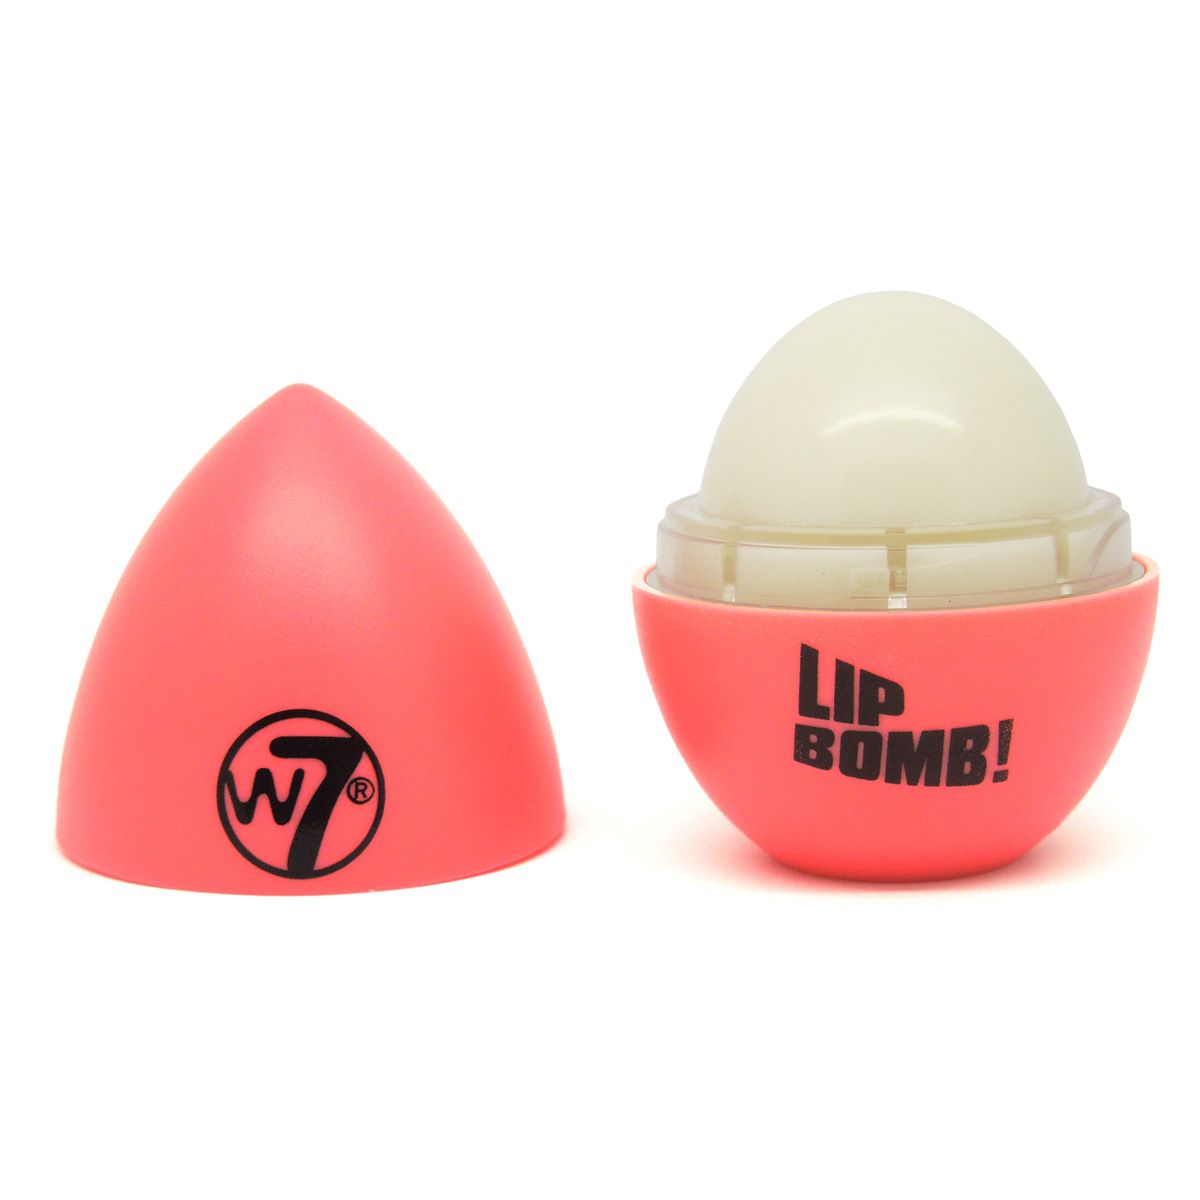 Lippenbalsam - Lip Bomb!